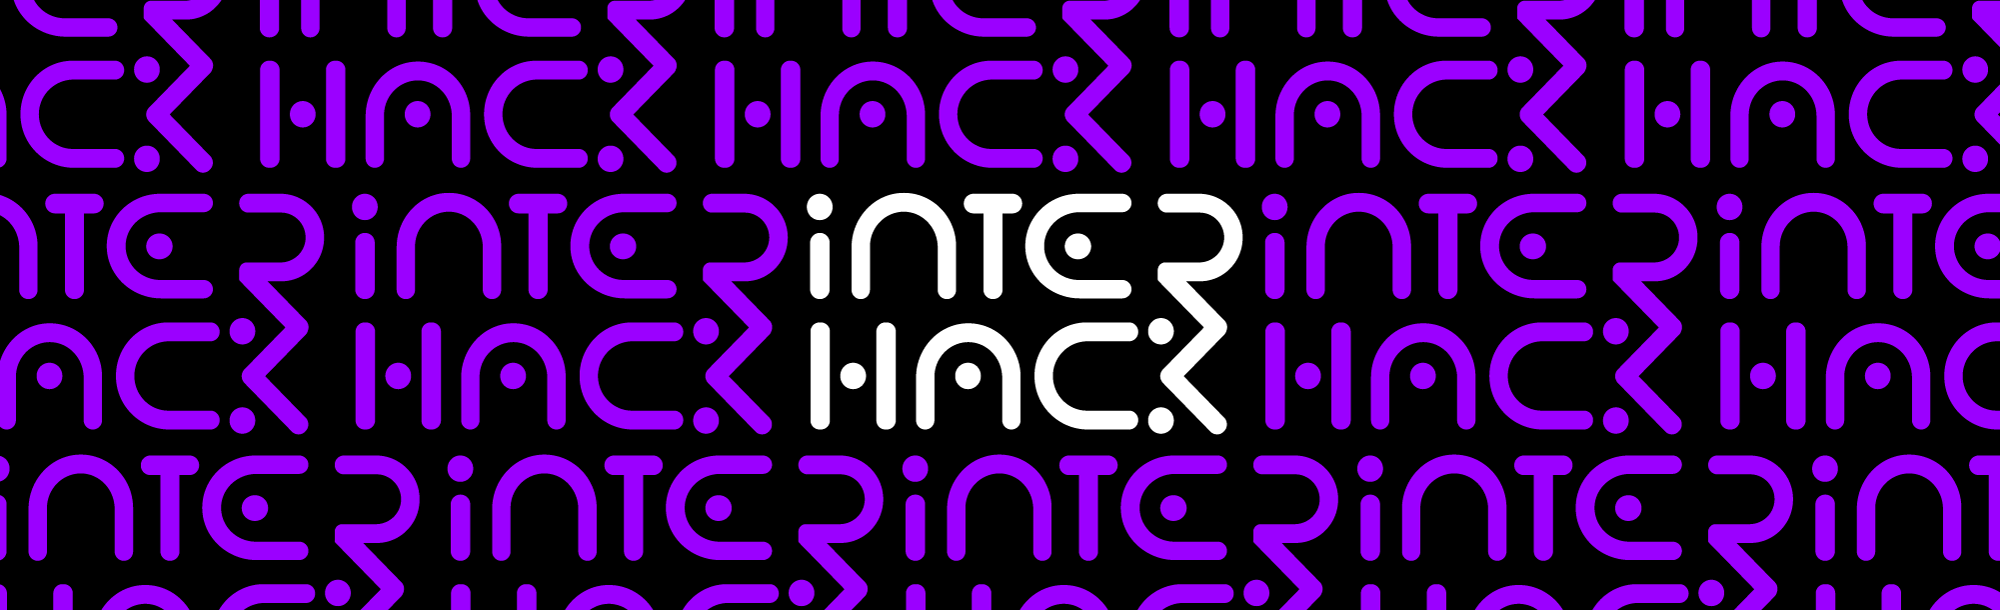 interhack-banner.png